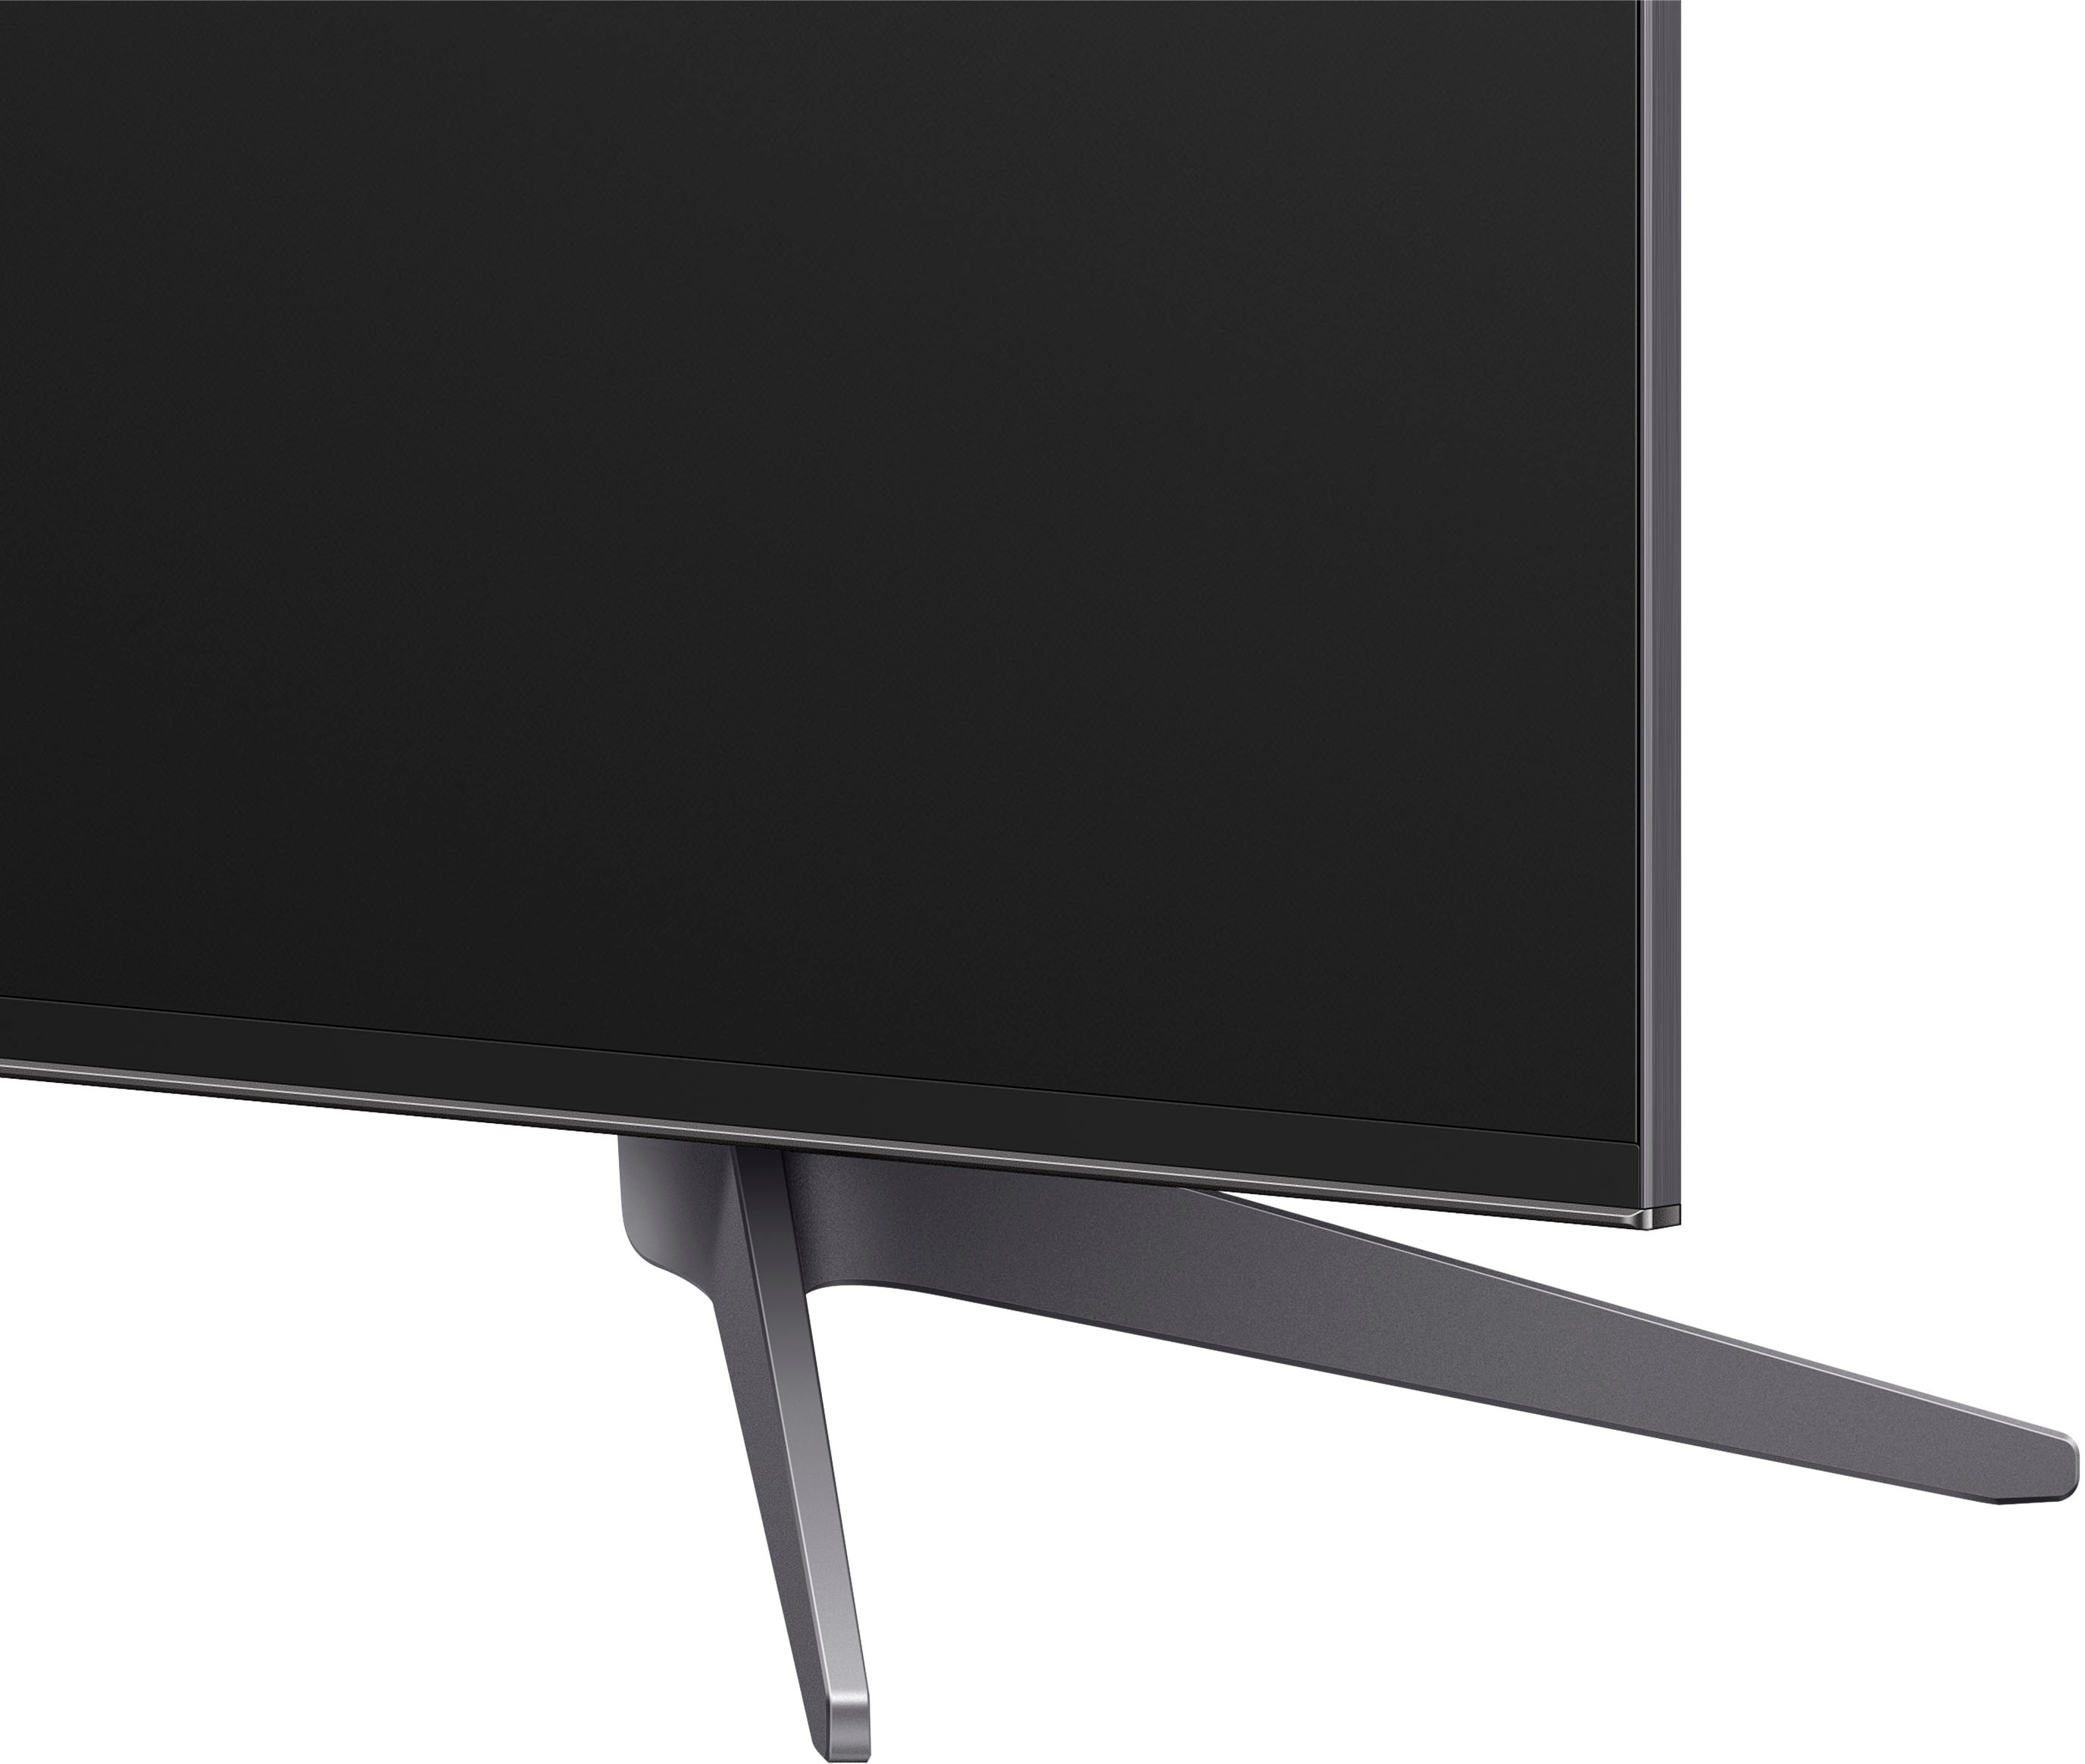 TCL 65 Class Q7 Q-Class QLED 4K HDR Smart TV with Google TV 65Q750G - Best  Buy